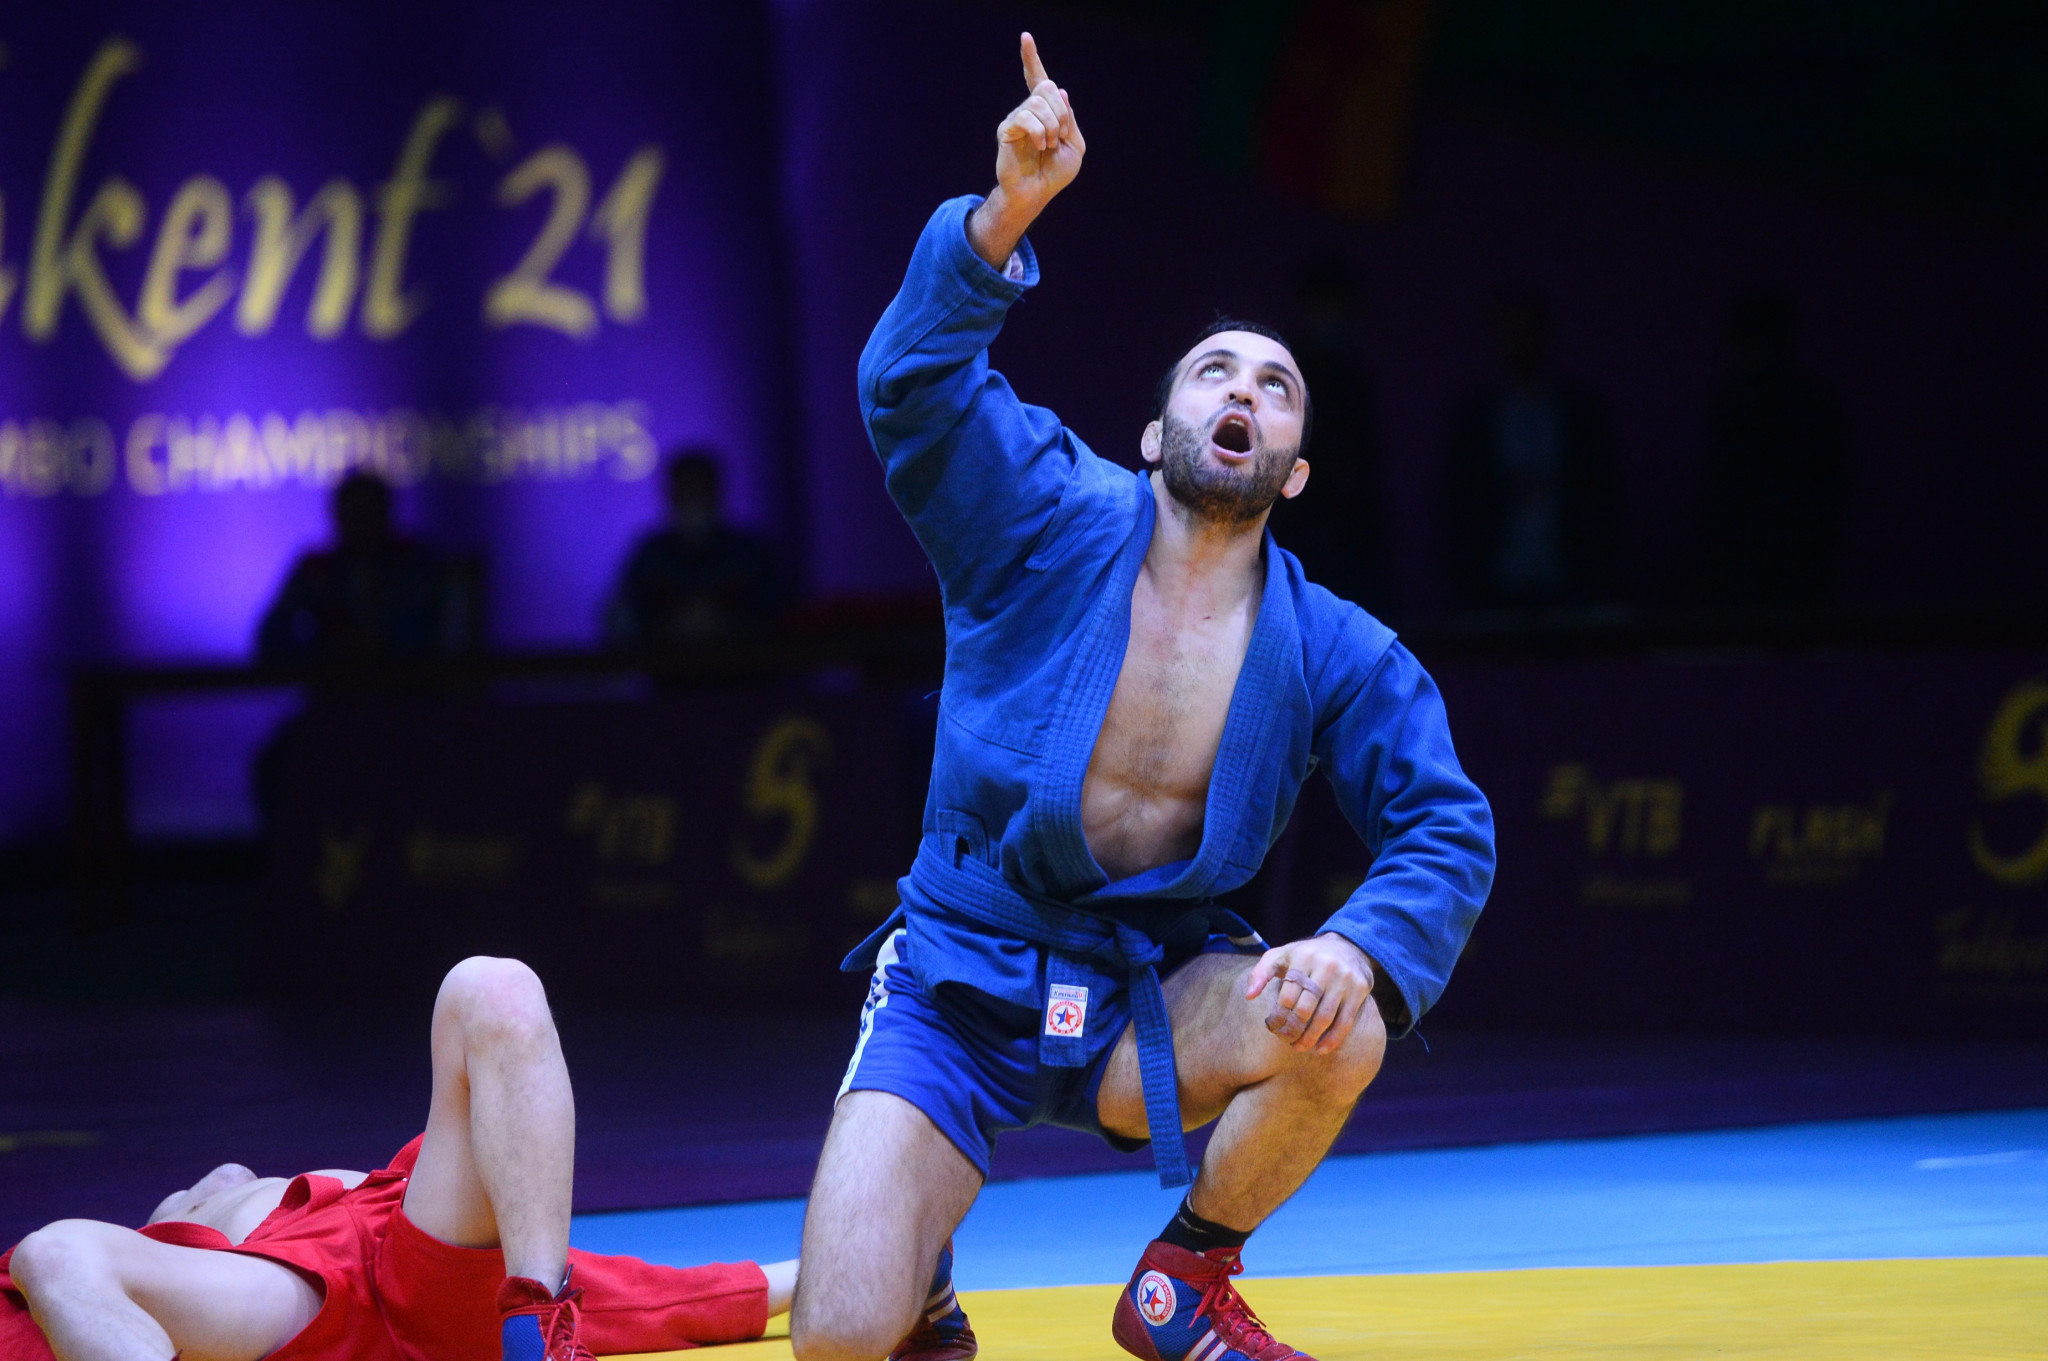 Akmaliddin Karimov celebrates after beating Sayan Khertek in the men's under-58kg final ©FIAS